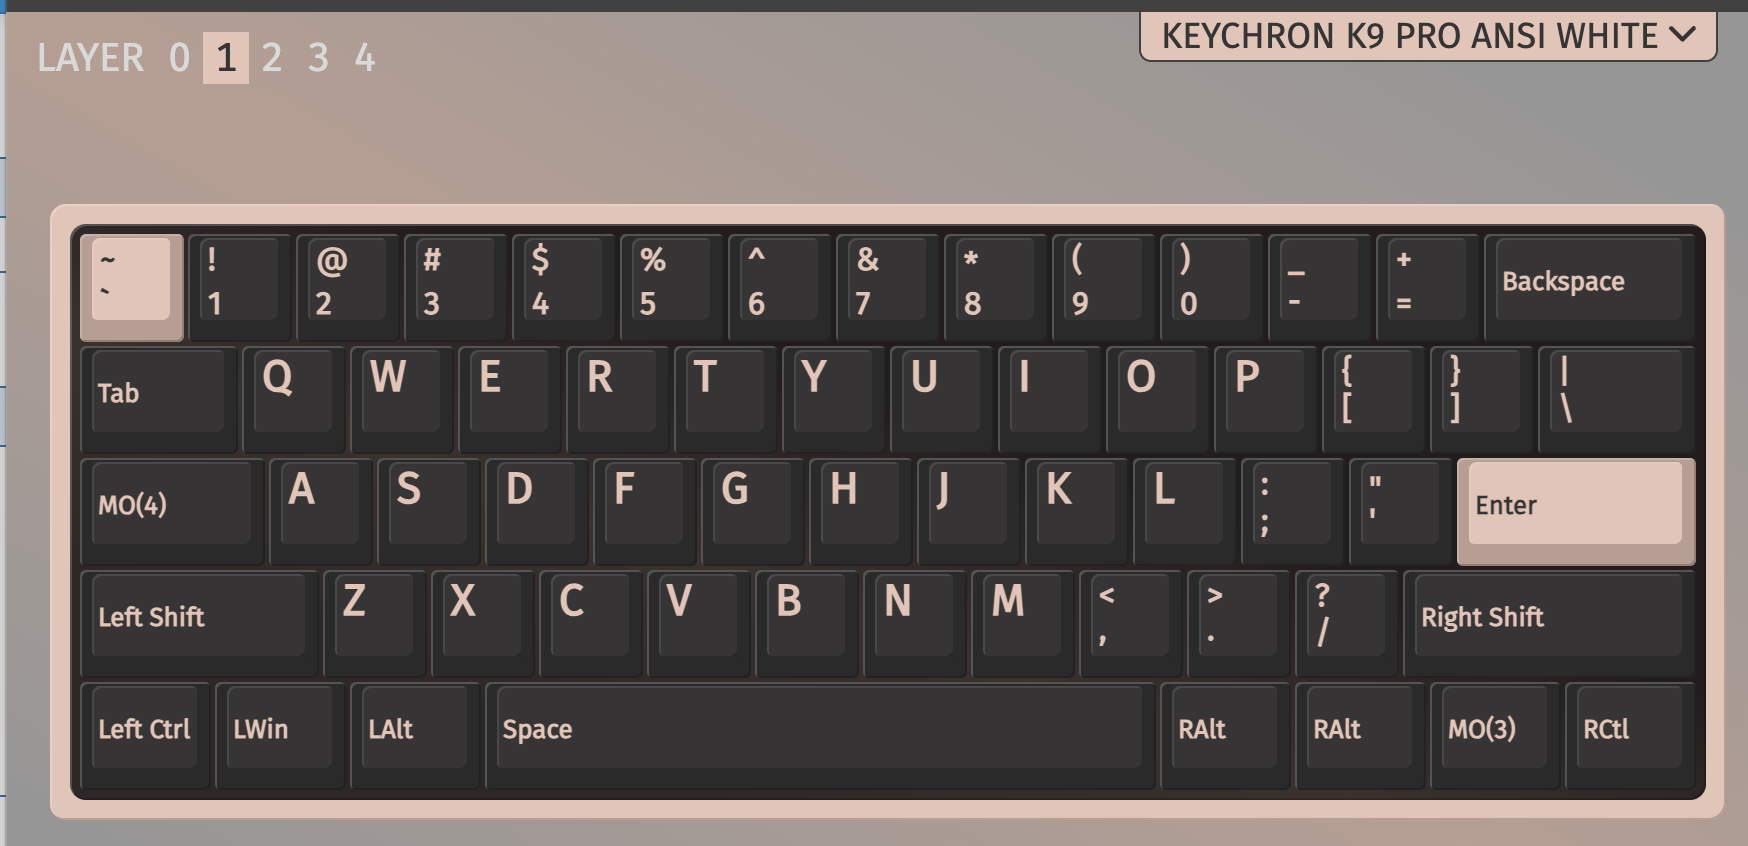 keyboard-layout-keychron-k9-pro-1.png